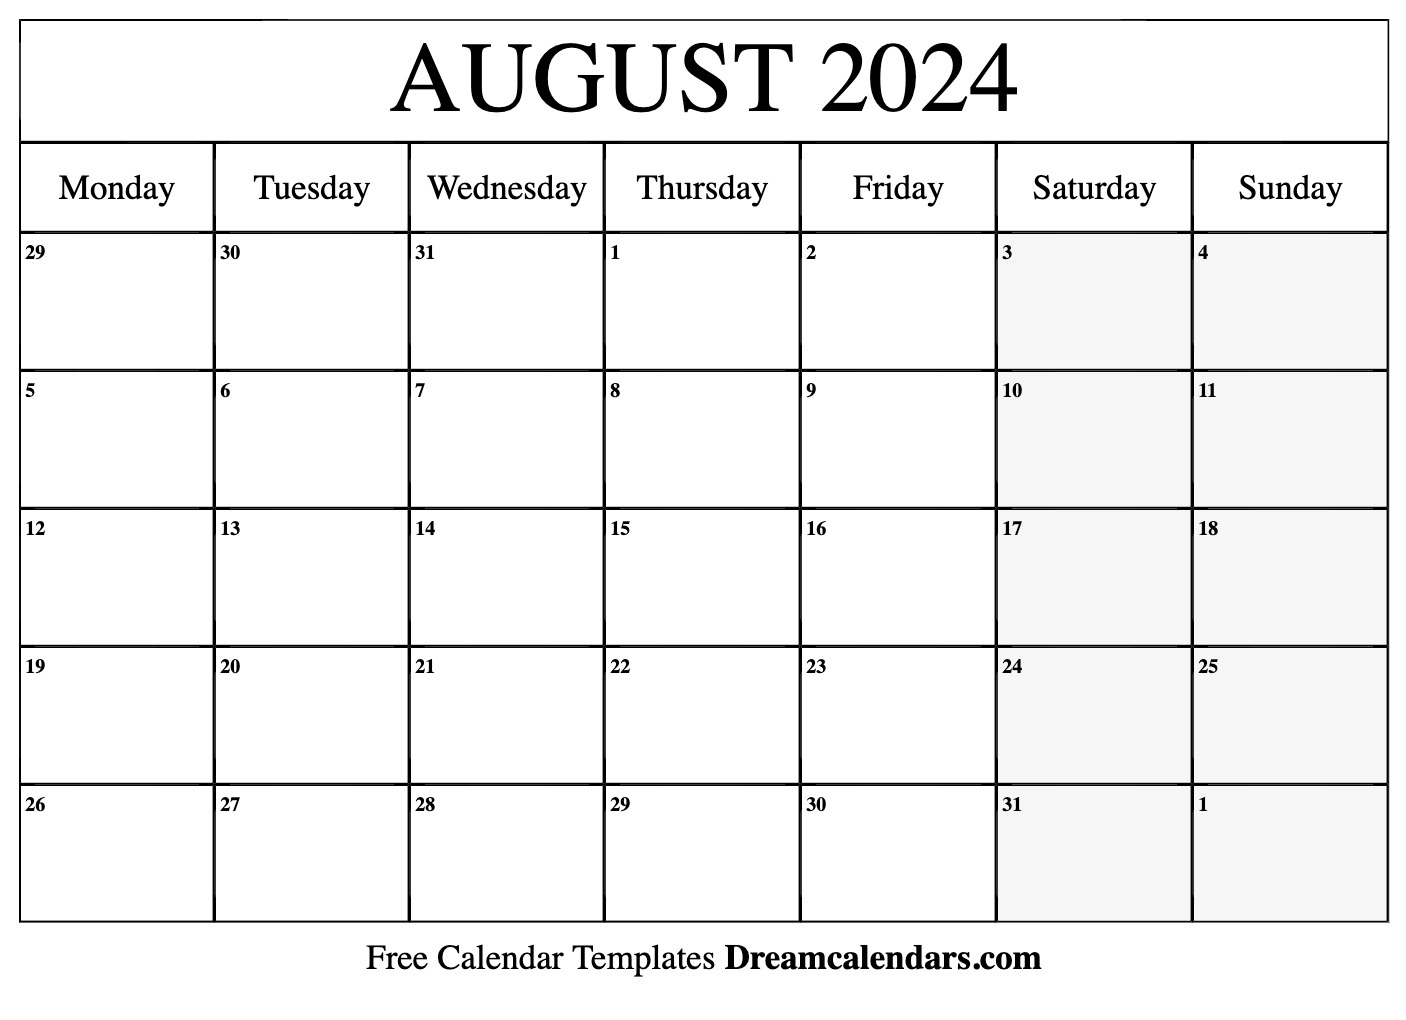 Free August 2024 Calendar Audra Candide - Free Printable Calendar 2024 July August September Free